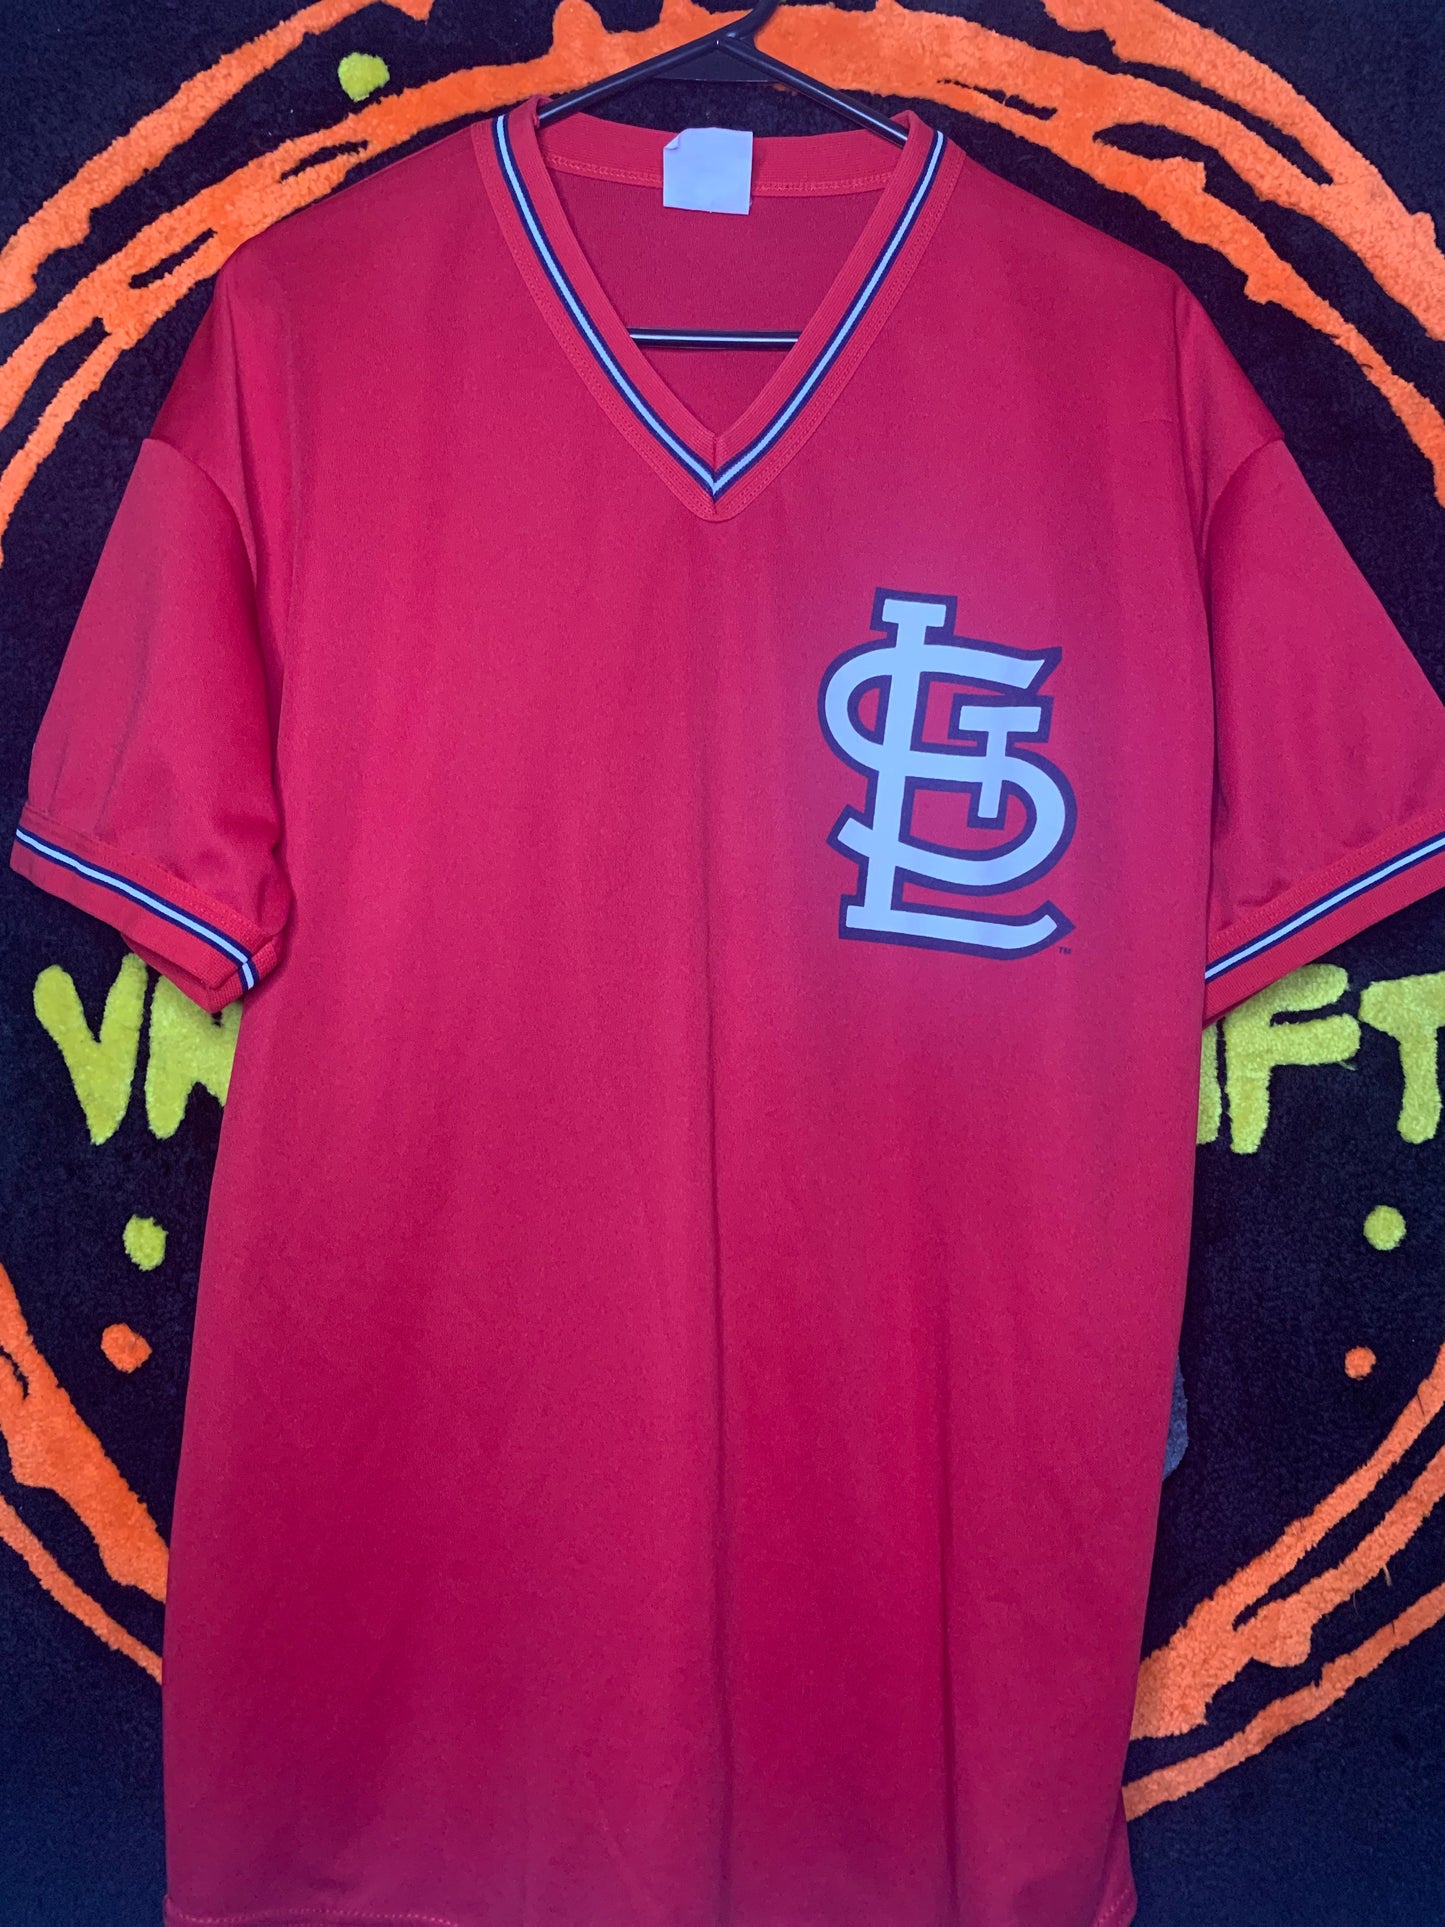 90s Majestic St. Louis Cardinals Jersey (XL)